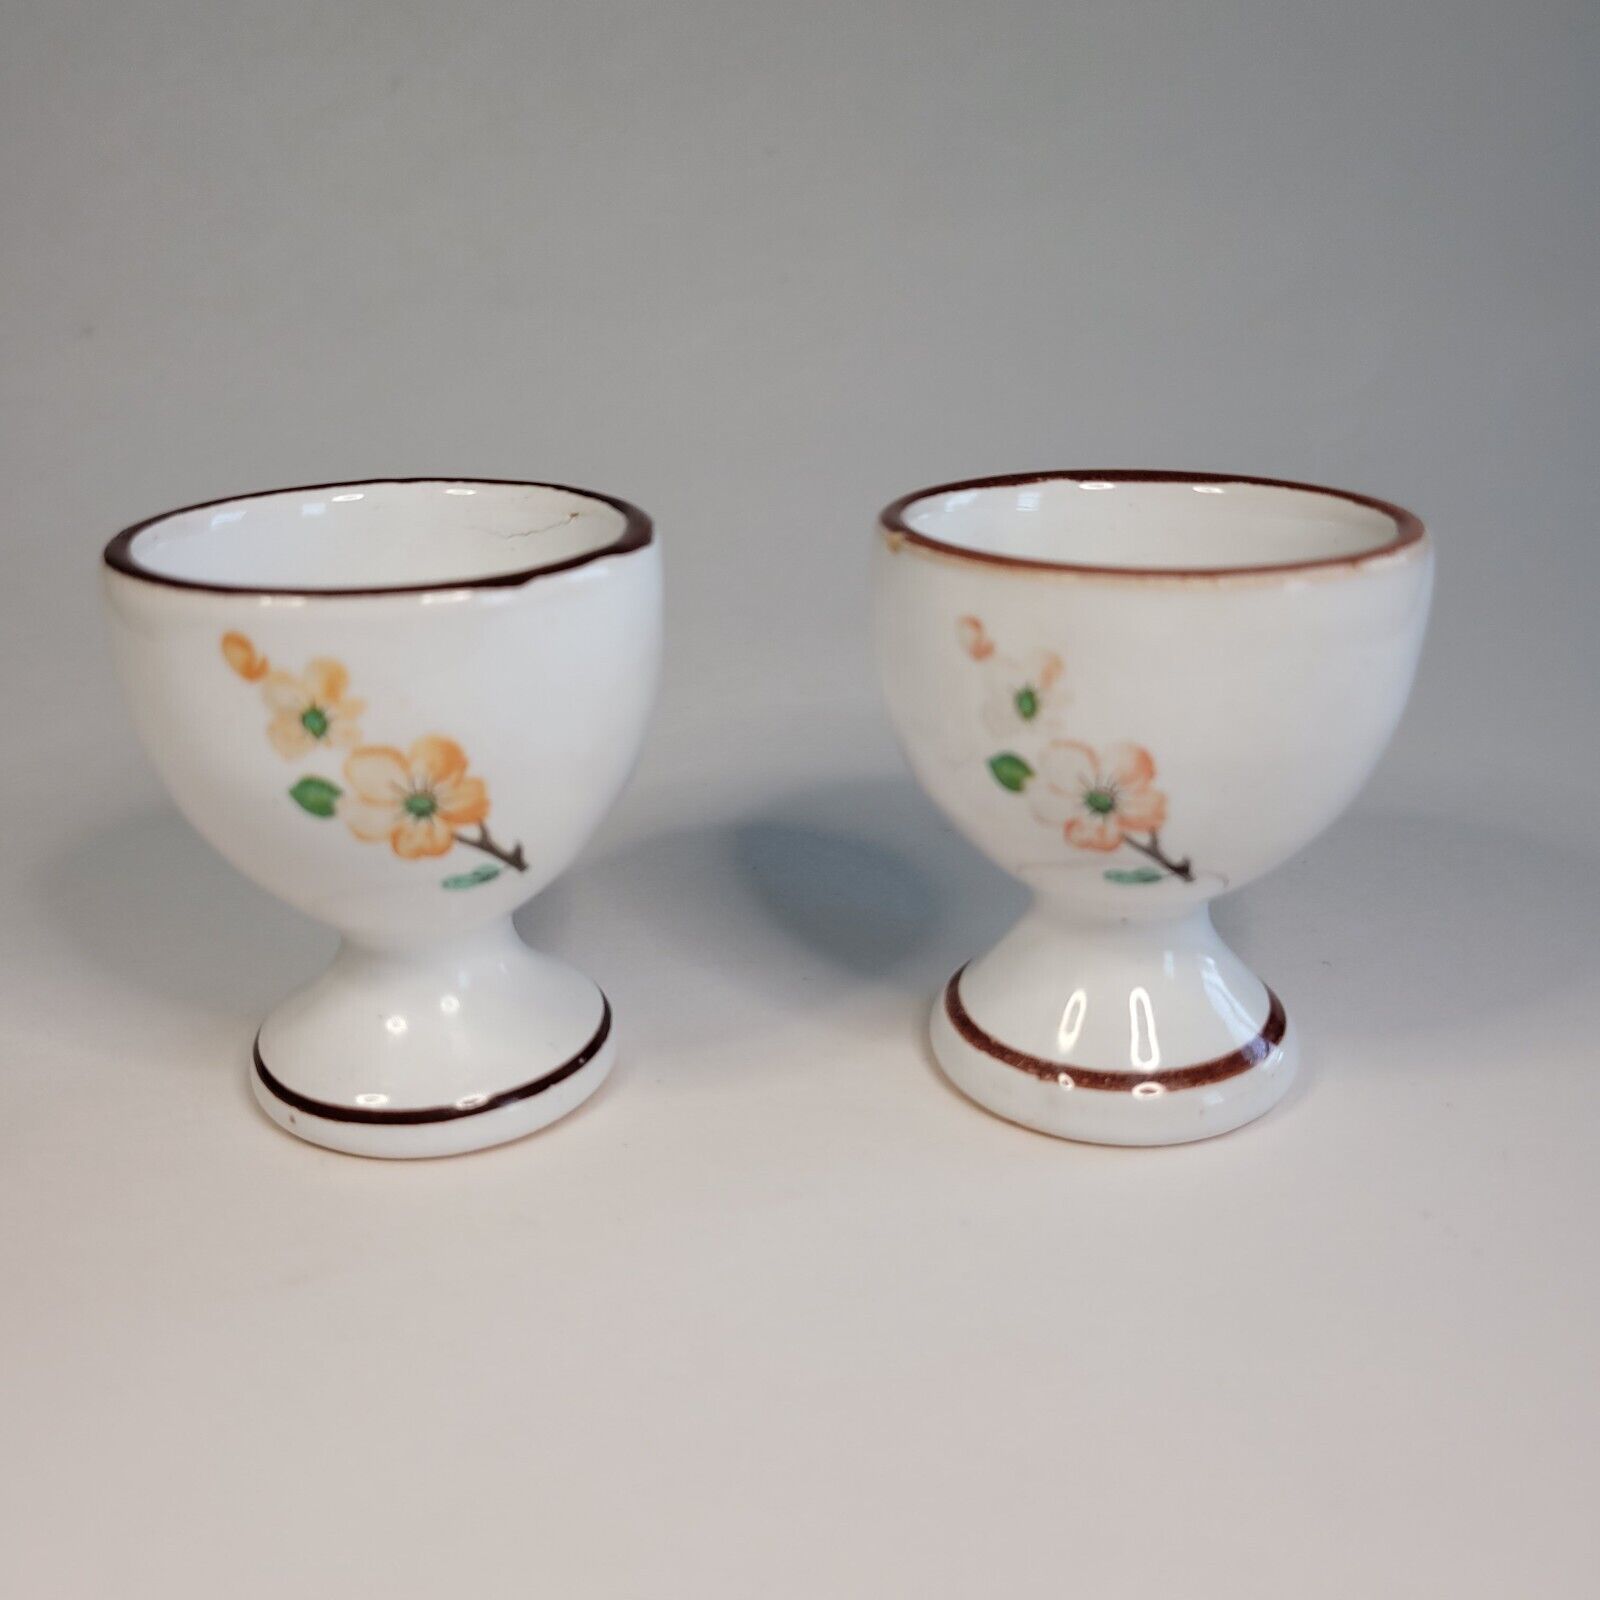 Two Egg Cups, Vintage Handmade, Flower Design, 2.5 inches tall, VTG, MCM,